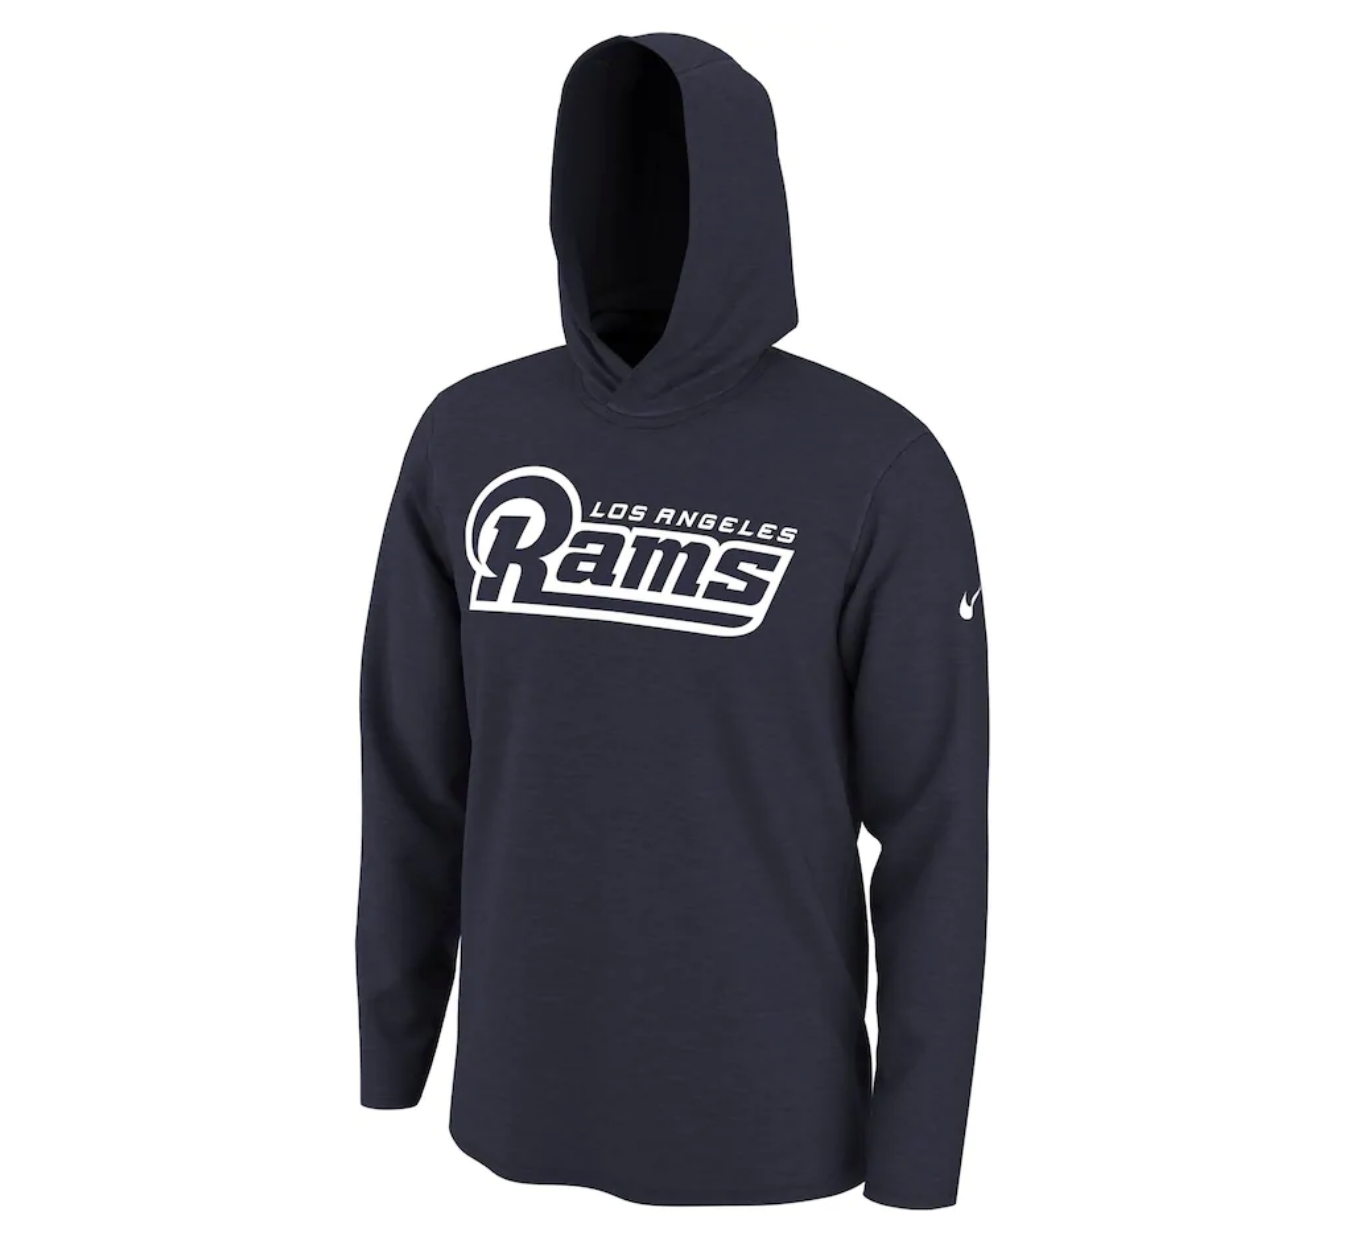 Nike Men's Los Angeles Rams Alternate Royal Hooded Long Sleeve T-Shirt